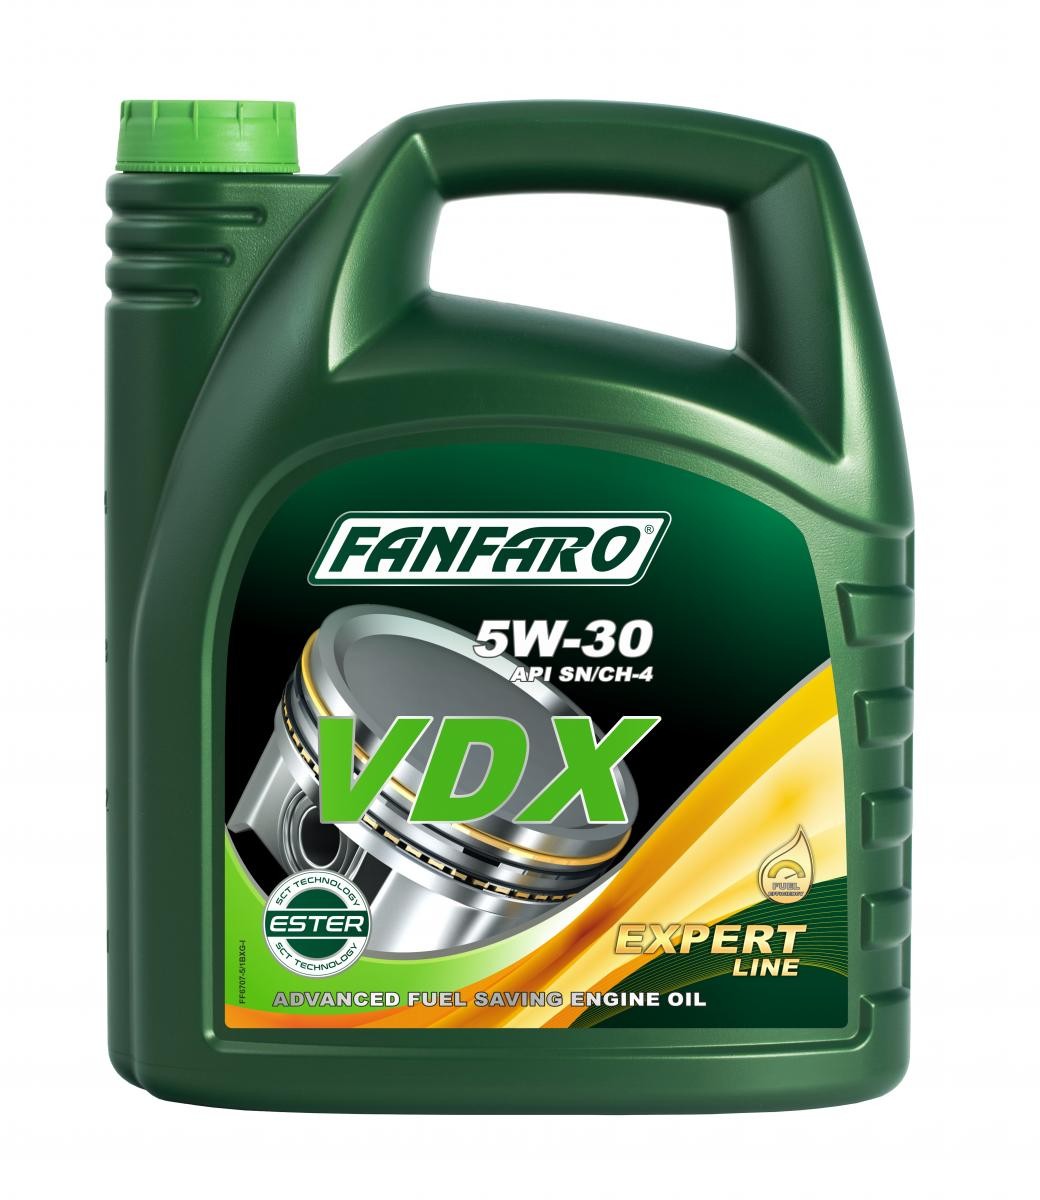 FANFARO Expert Line, VDX FF6707-5 Engine oil 5W-30, 5l, Synthetic Oil